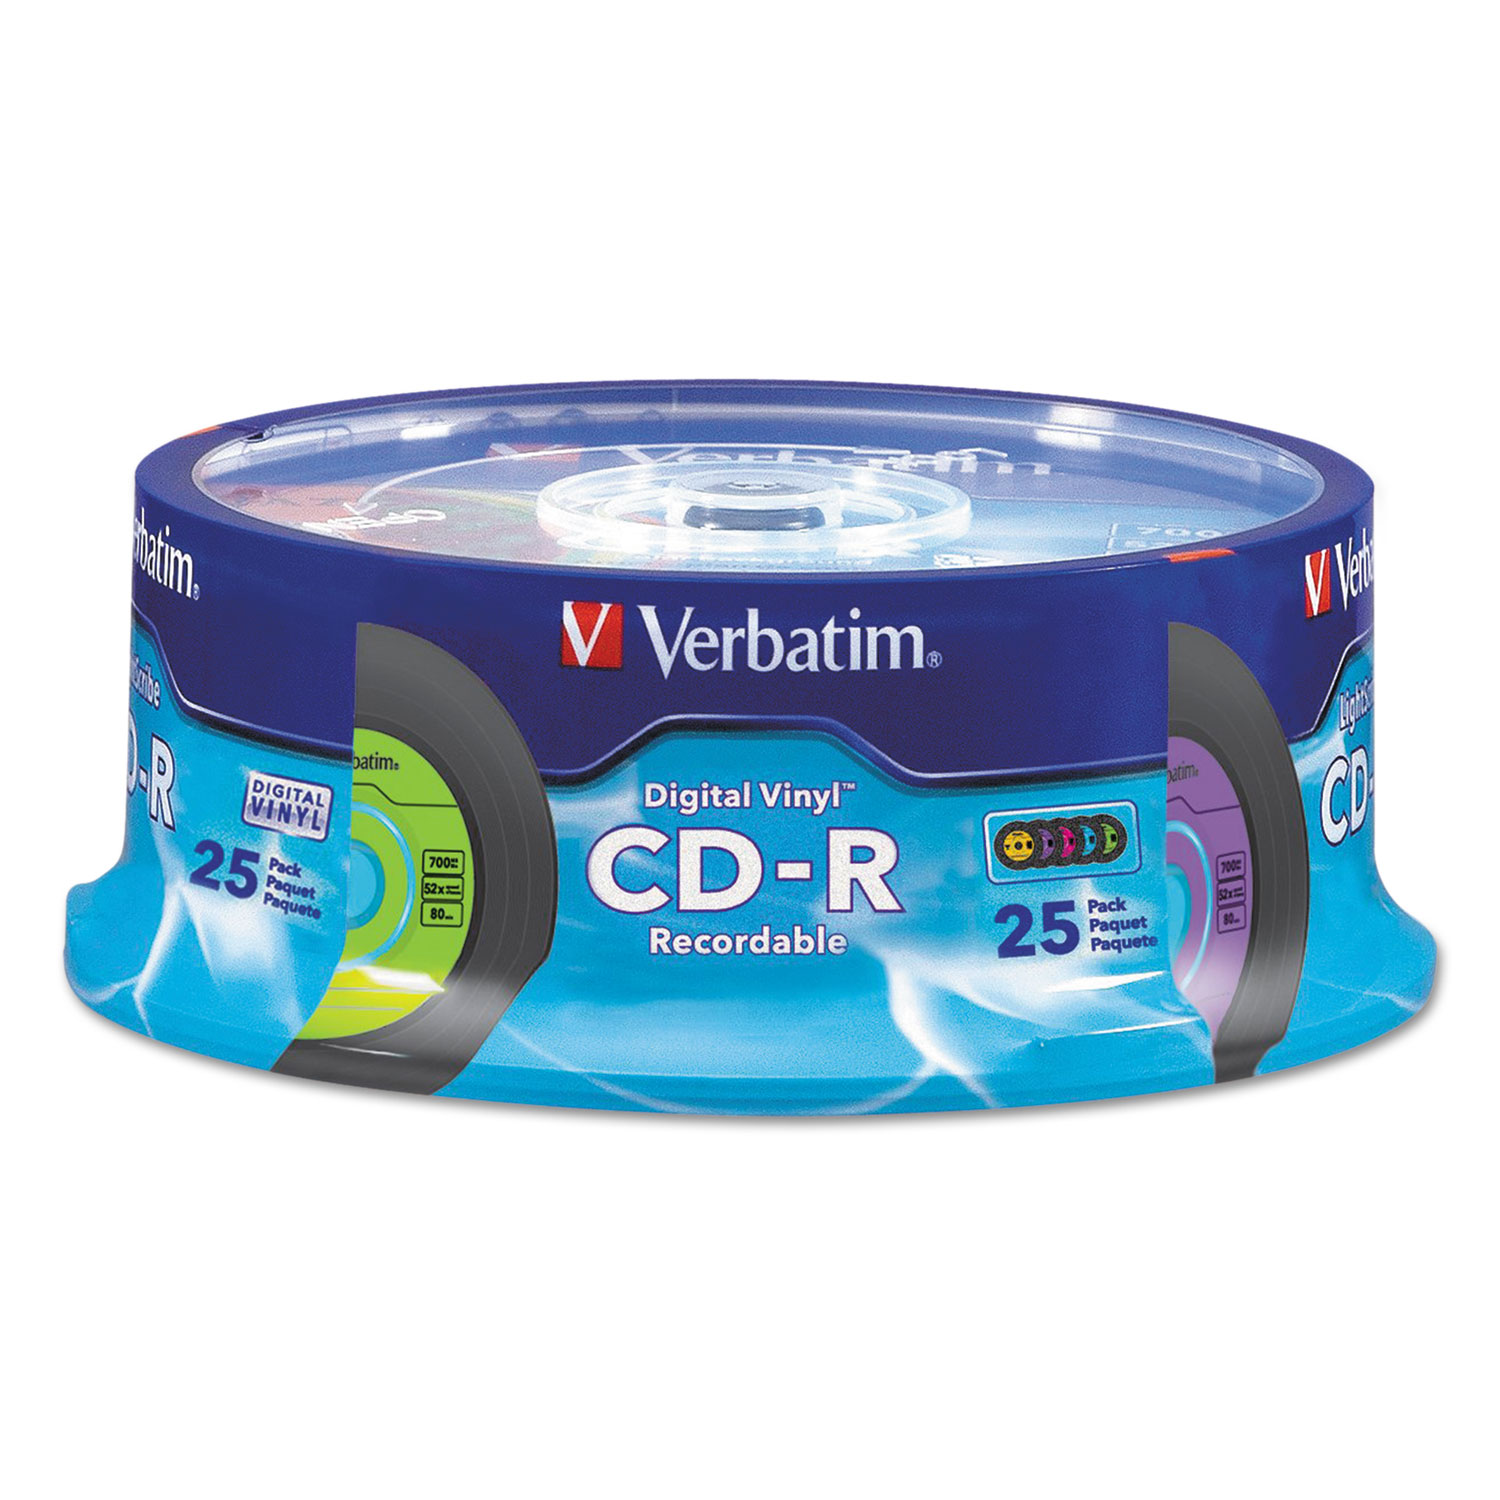  Verbatim 94488 CD-R with Digital Vinyl Surface, 80min, 52X, 25/PK Spindle (VER94488) 